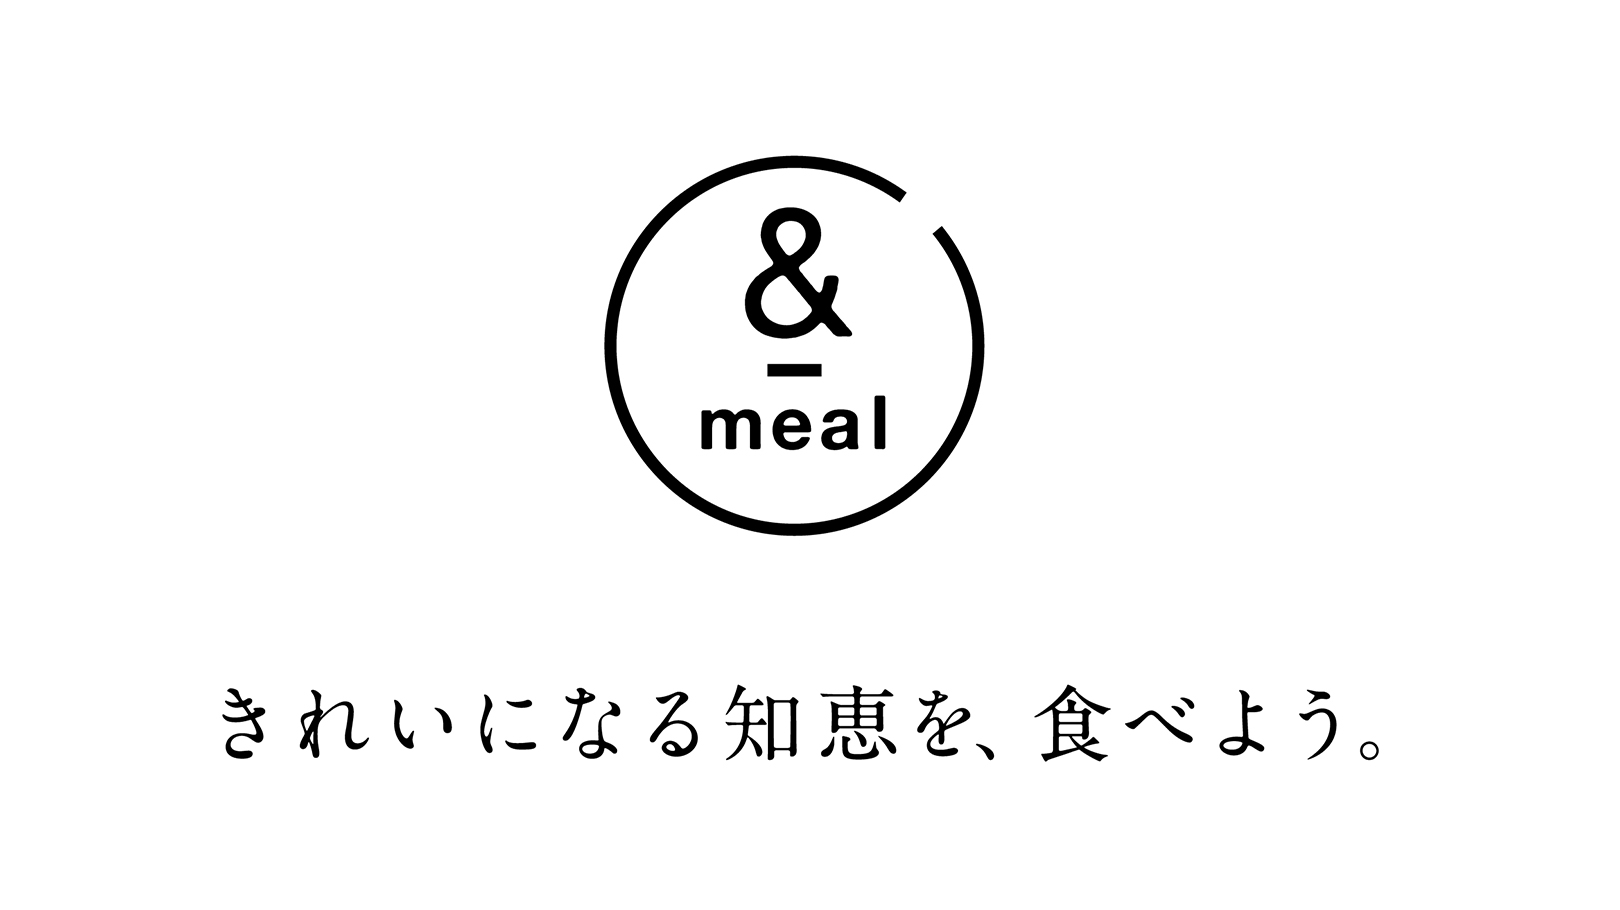 andmeal_logo.jpg